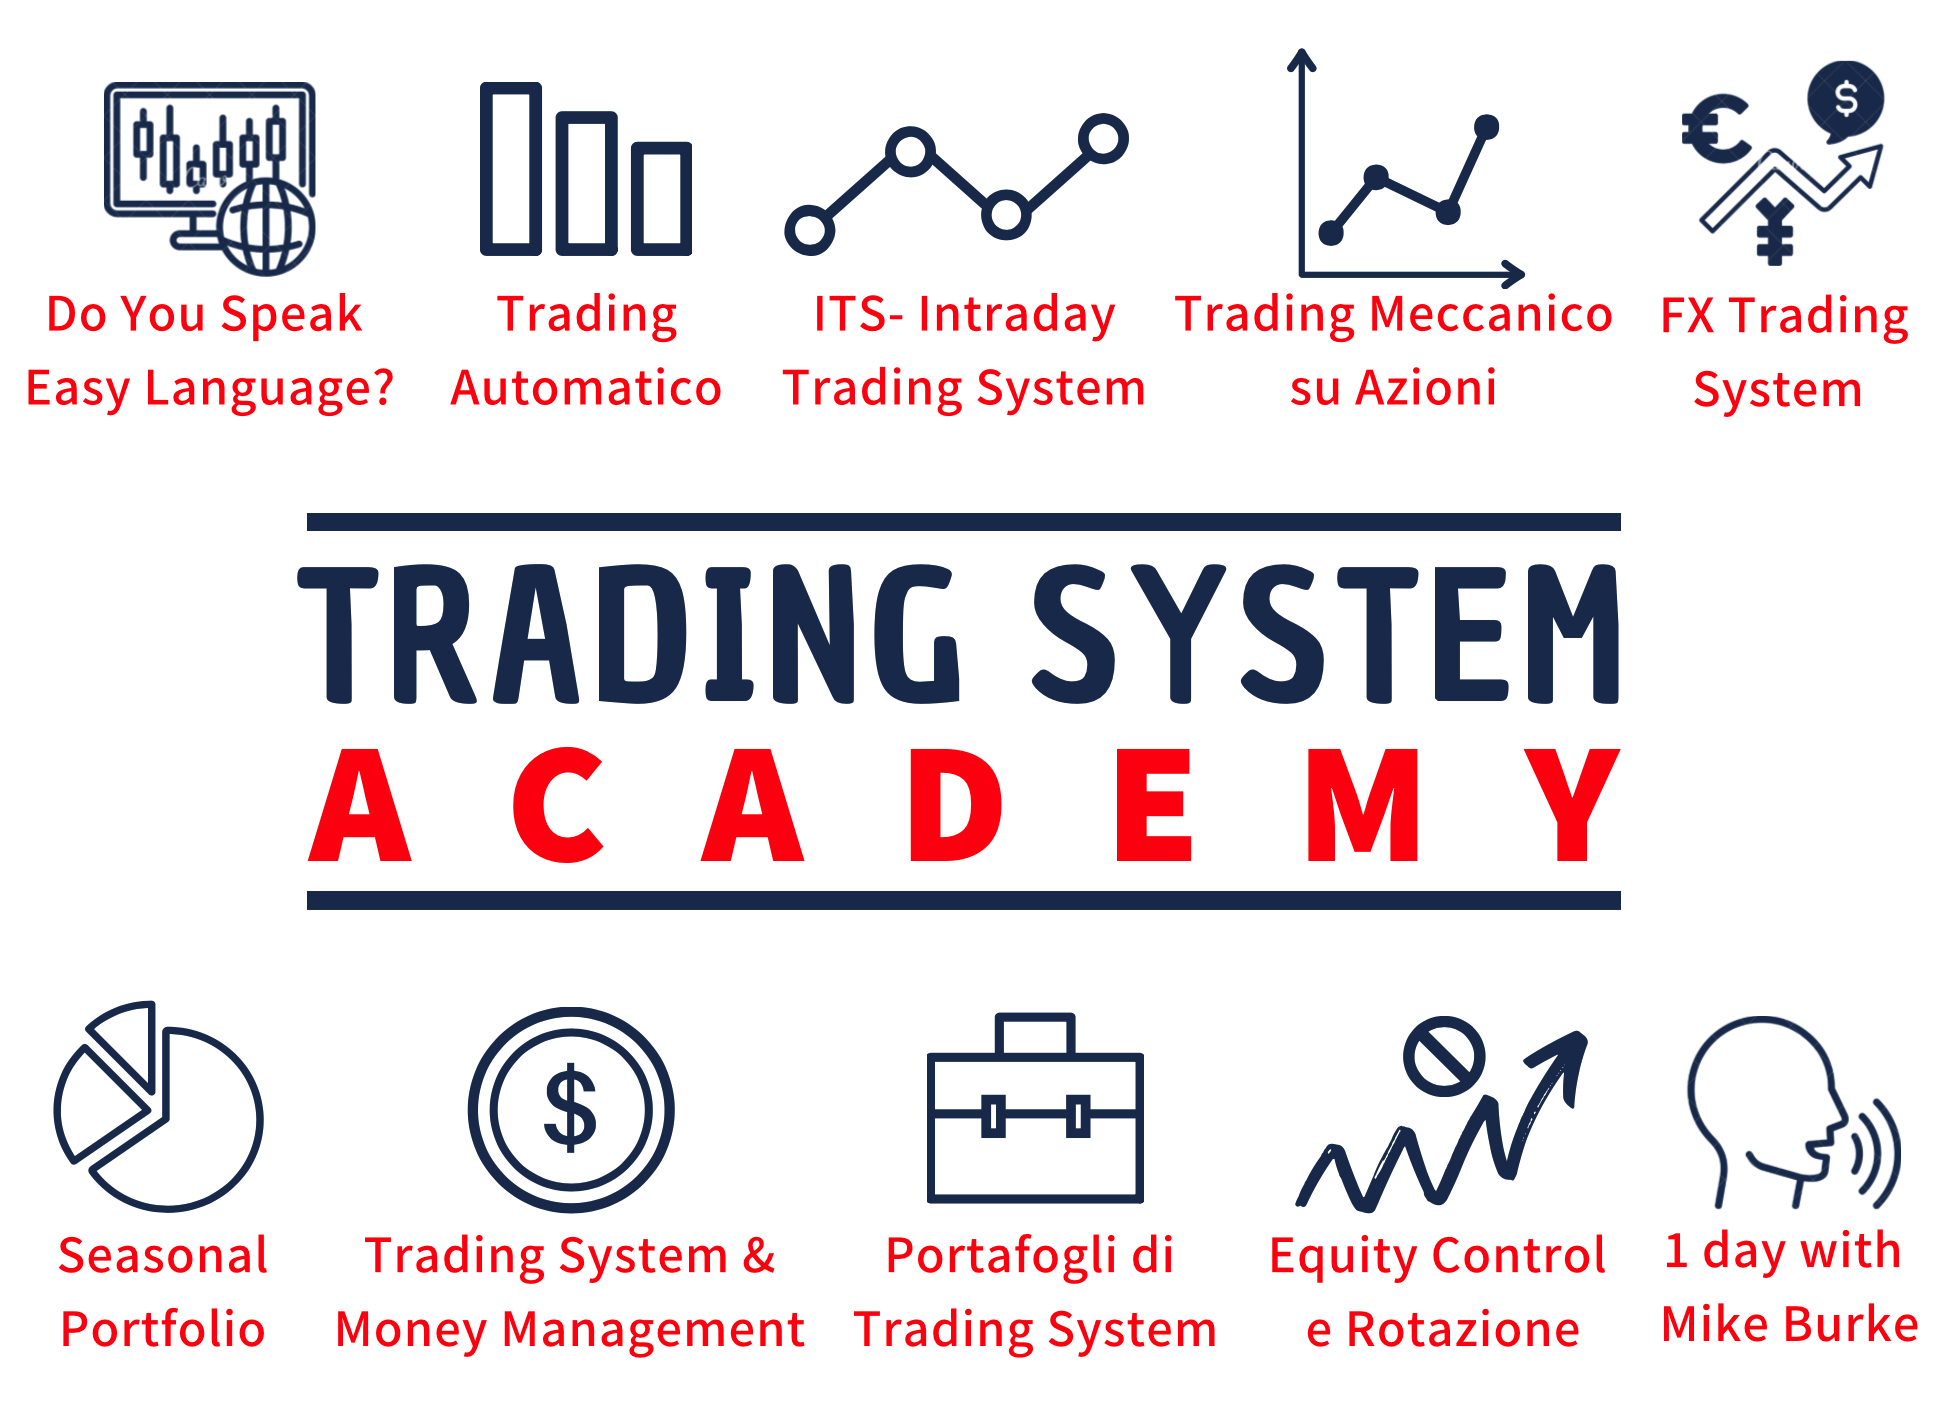 Qtlab corsi trading system academy, corsi forex trading qtlab, strategie di trading sul forex